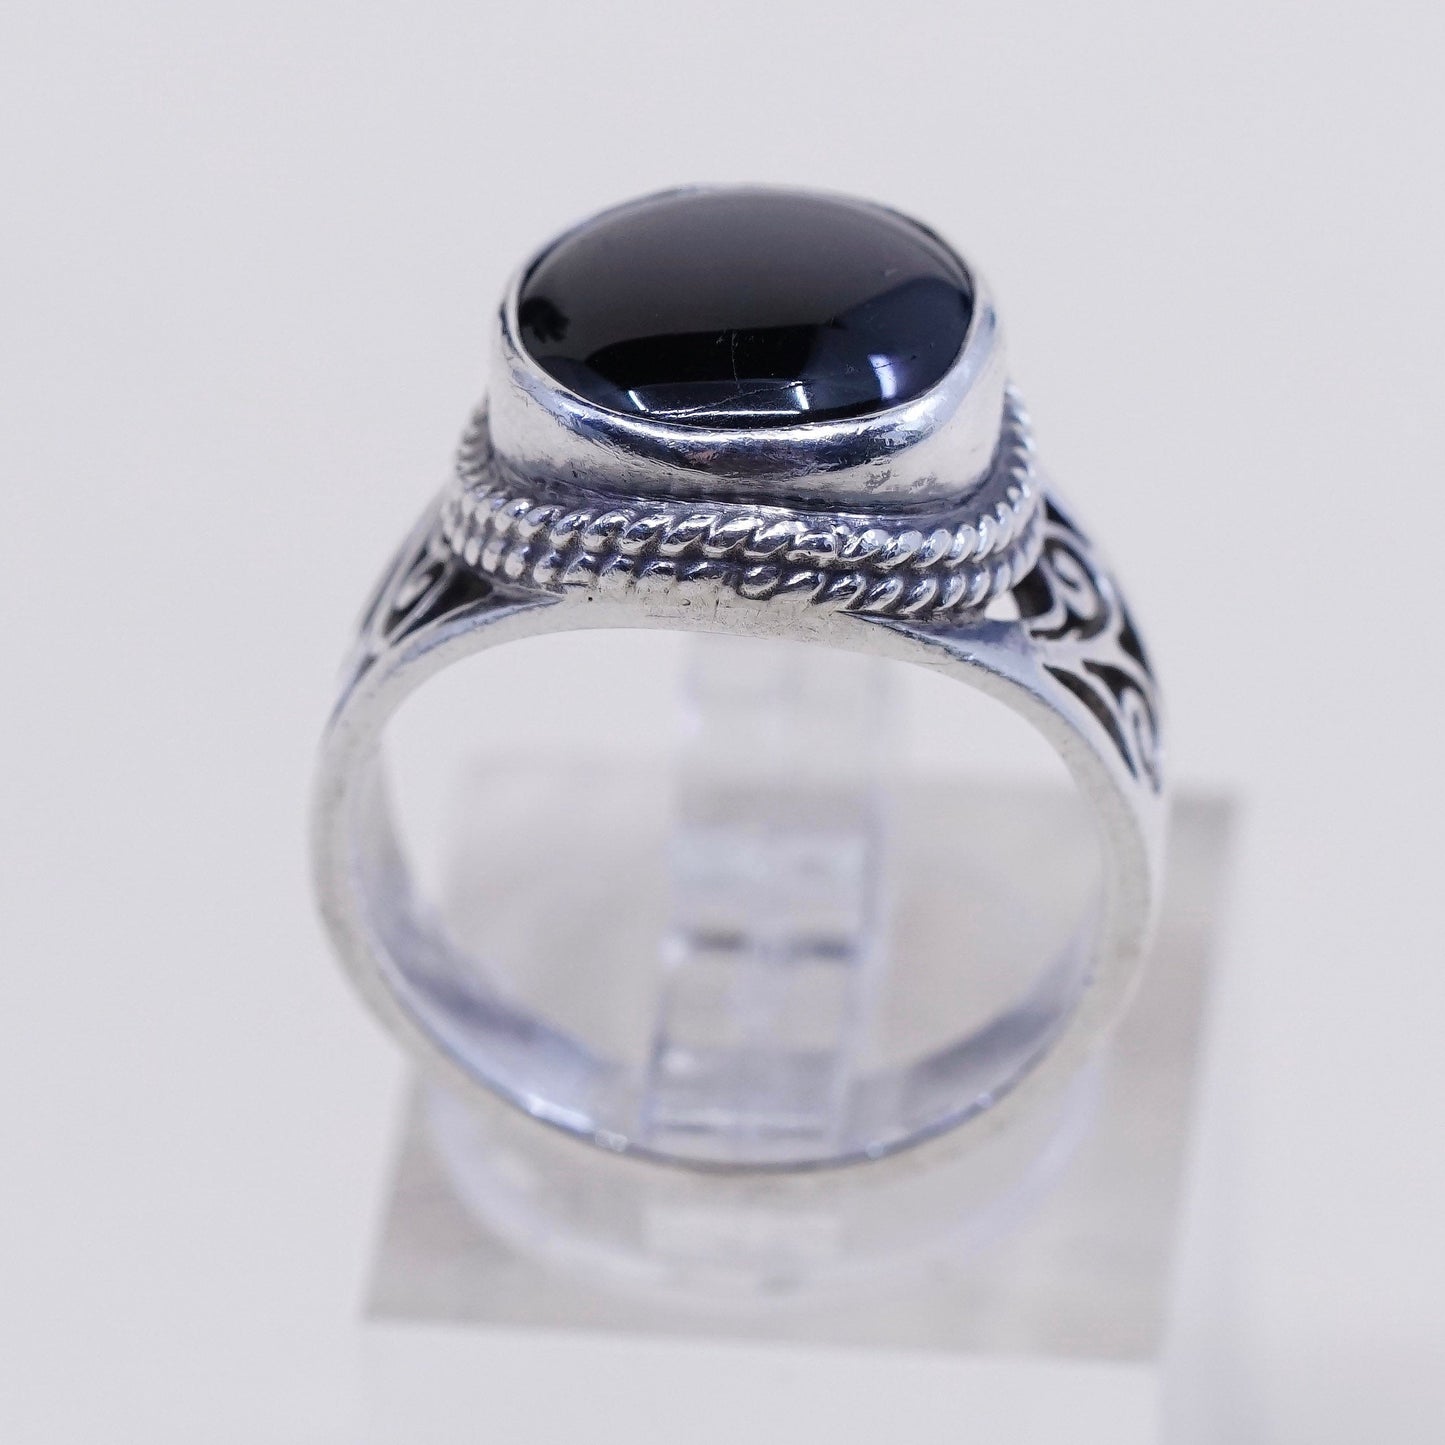 sz 7, vtg sterling silver ring, handmade filigree 925 ring w/ black tiger eye